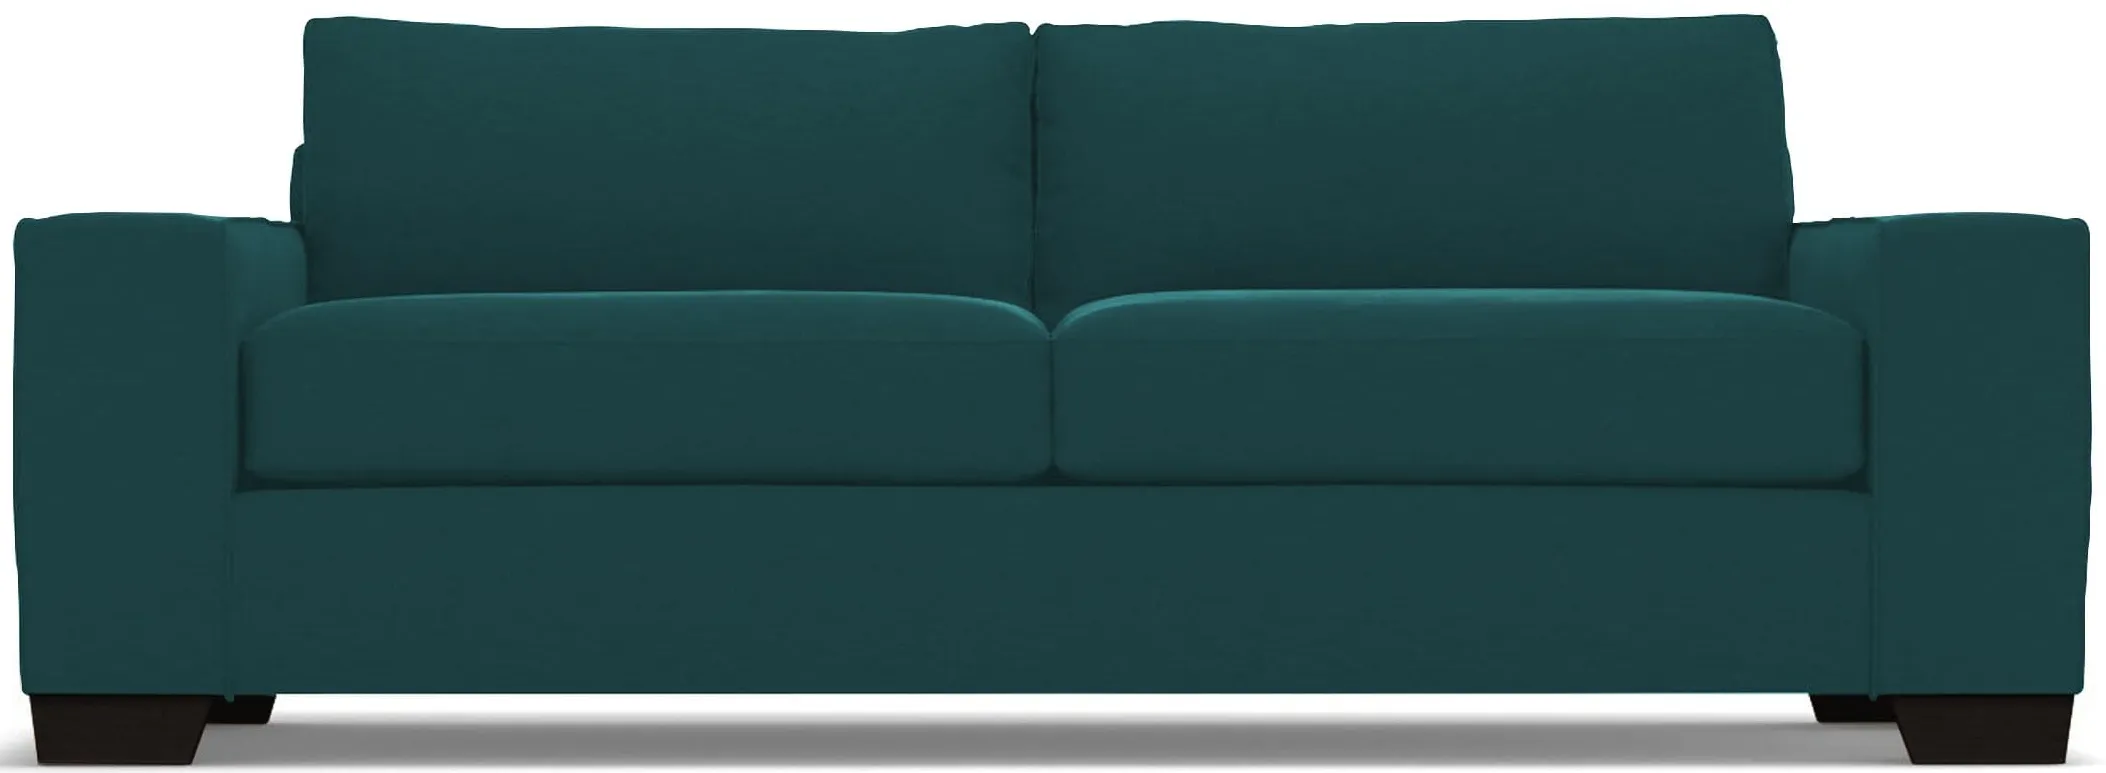 Melrose Queen Size Sleeper Sofa Bed